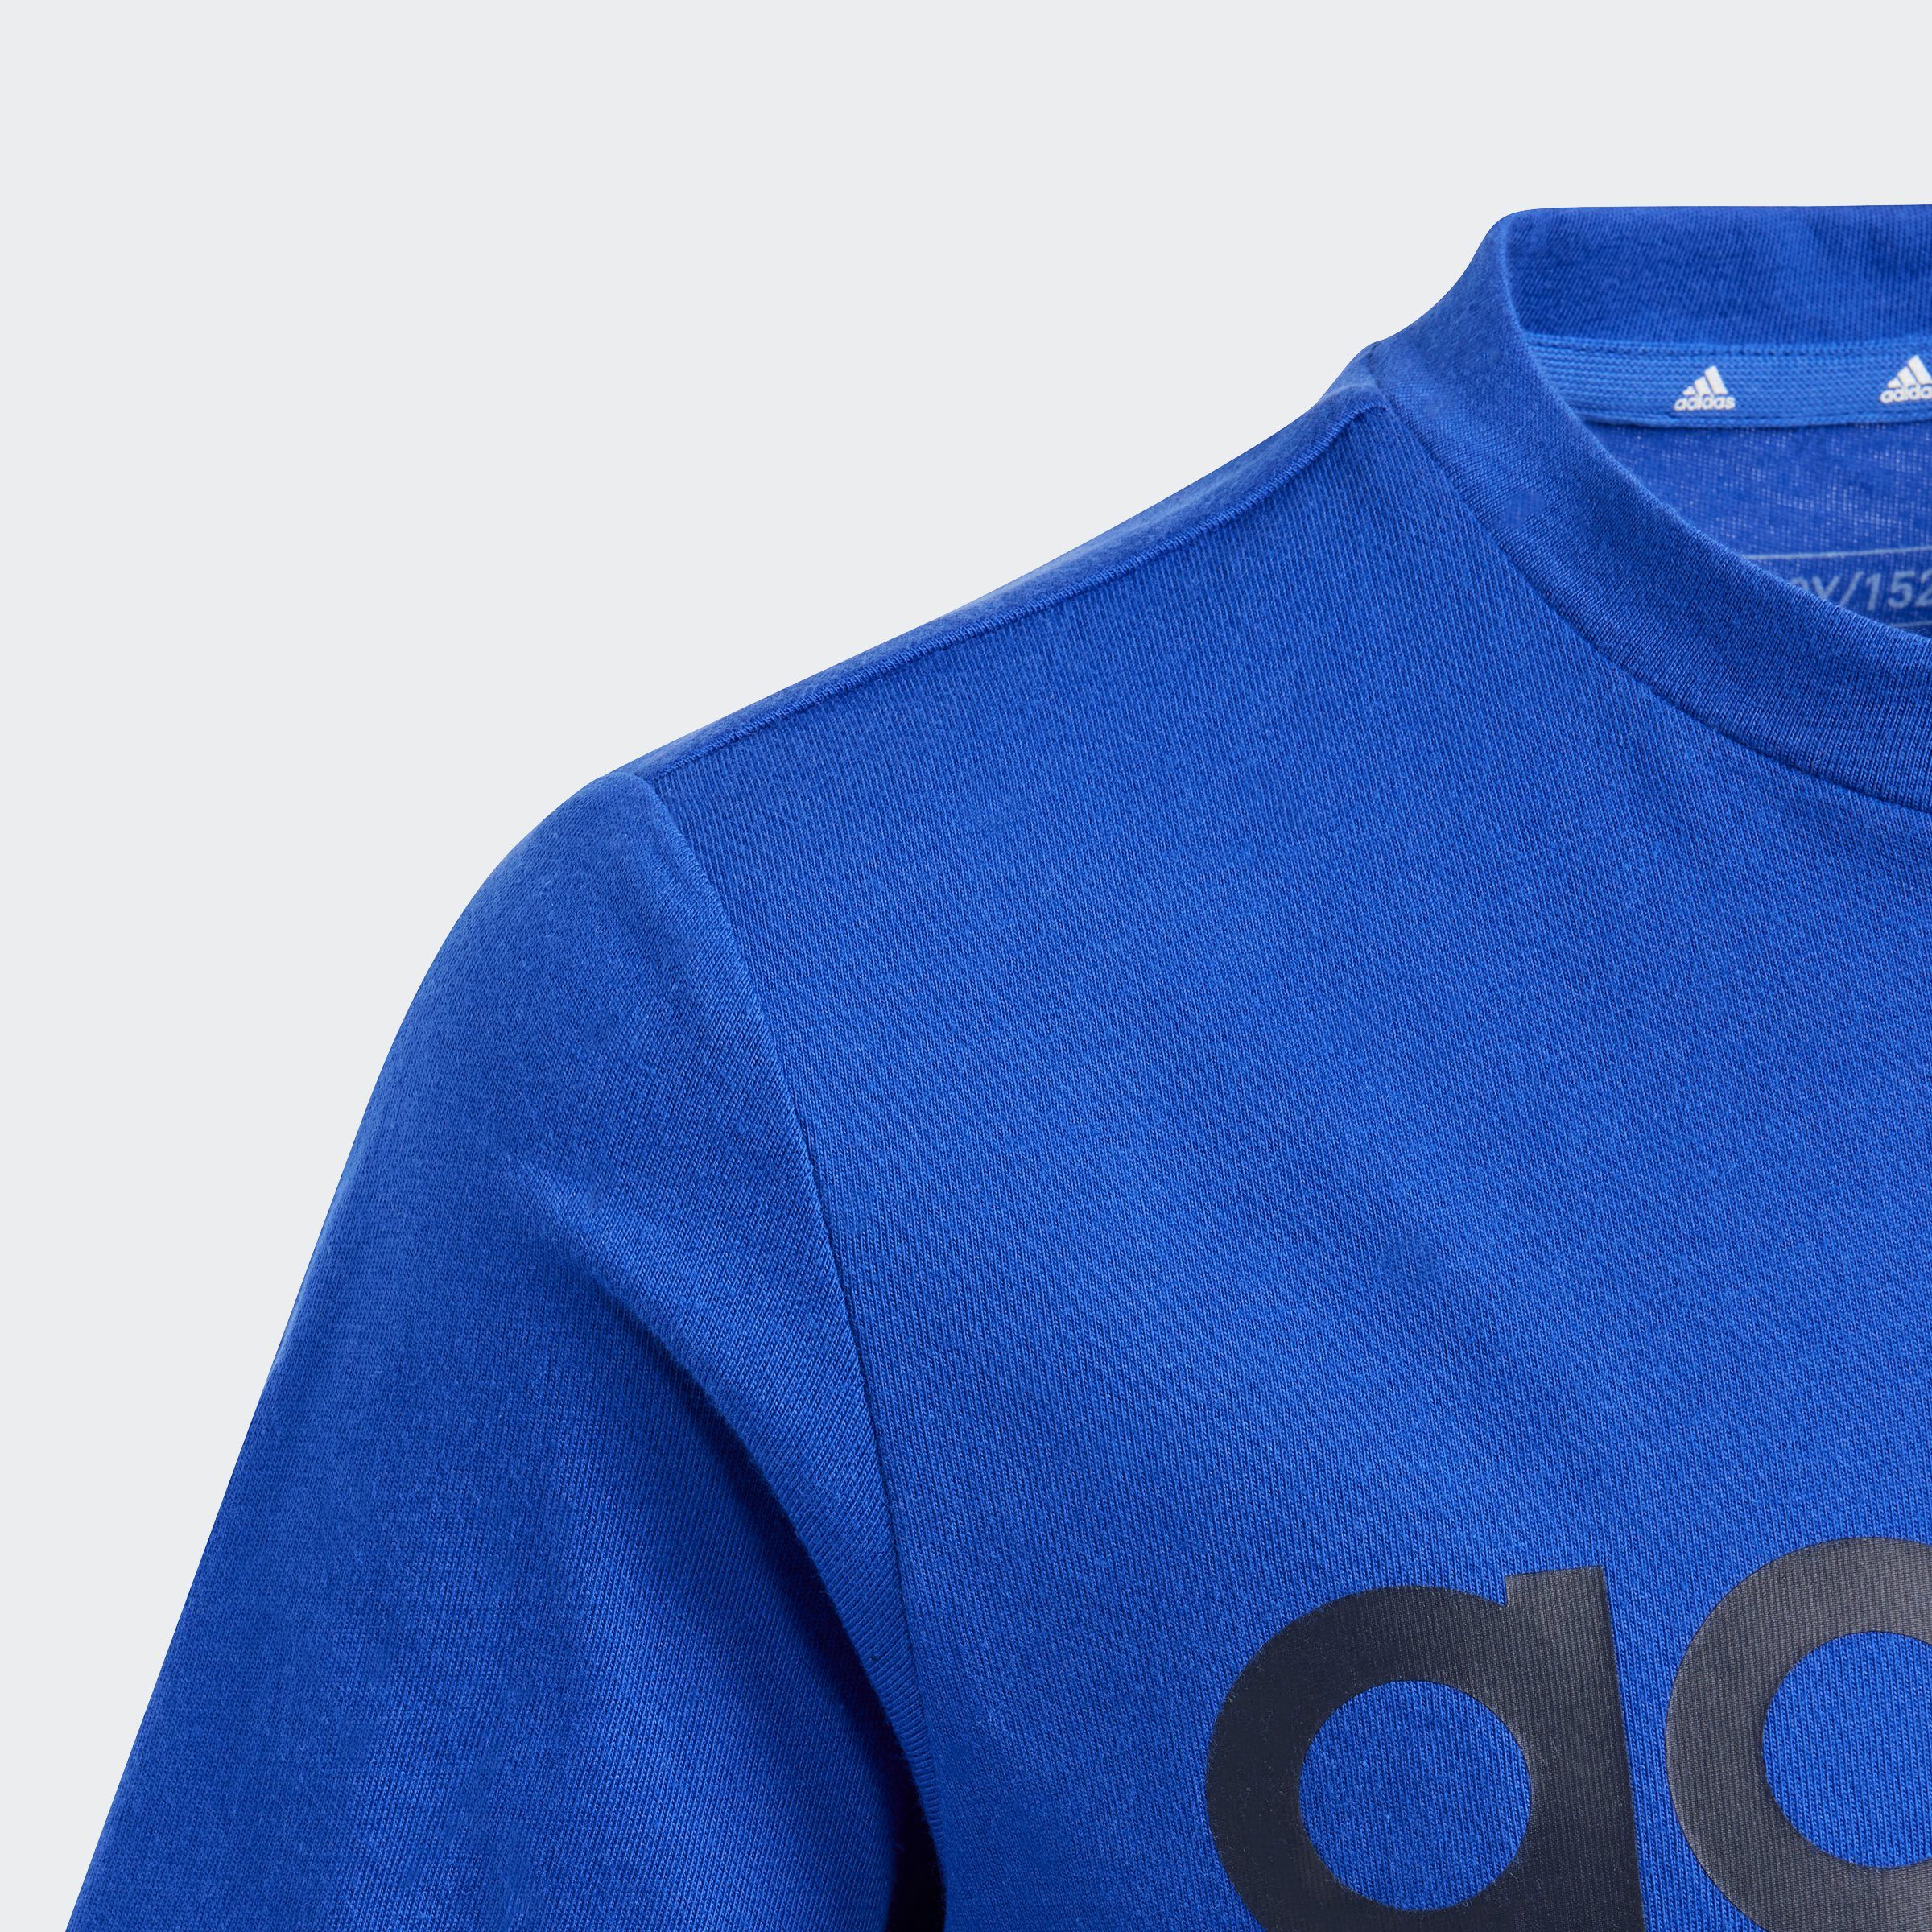 COTTON / Ink Legend LINEAR ESSENTIALS T-Shirt LOGO Blue Sportswear adidas Lucid Semi